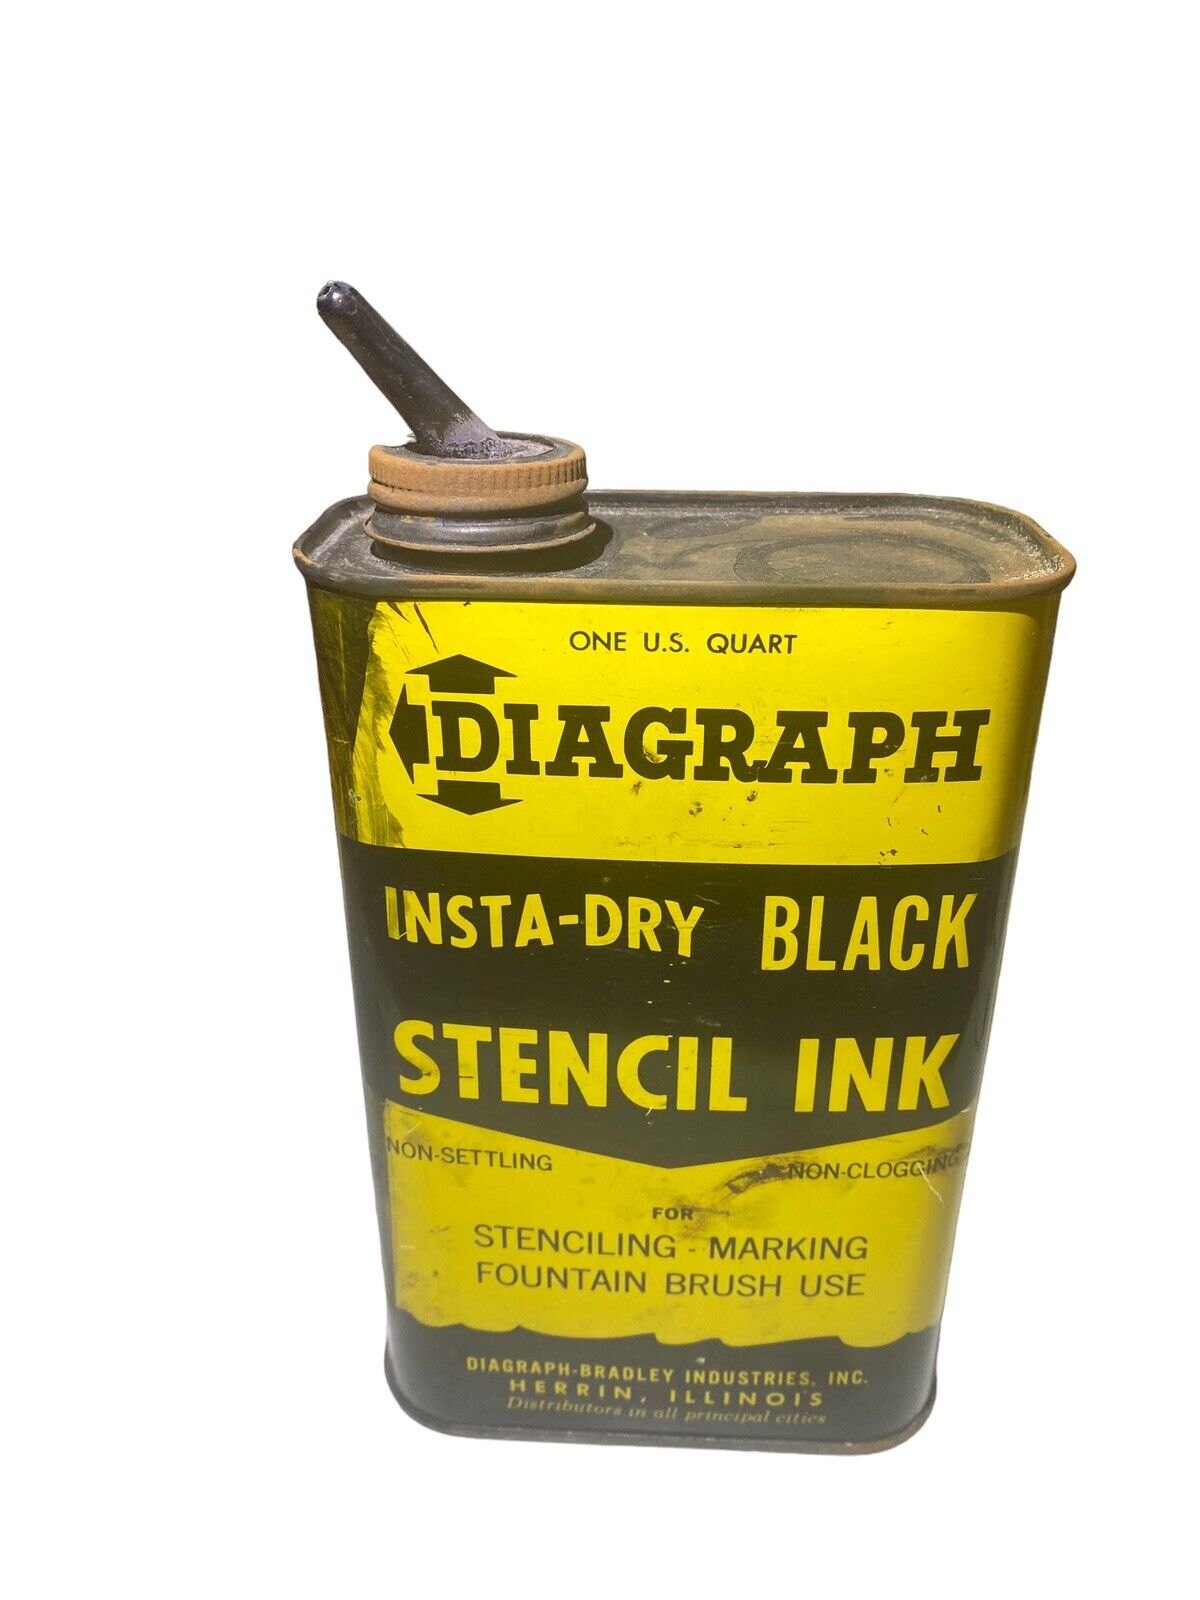 Diagraph Insta-dry Black Stencil Ink Tin Empty Dried Up 1qt